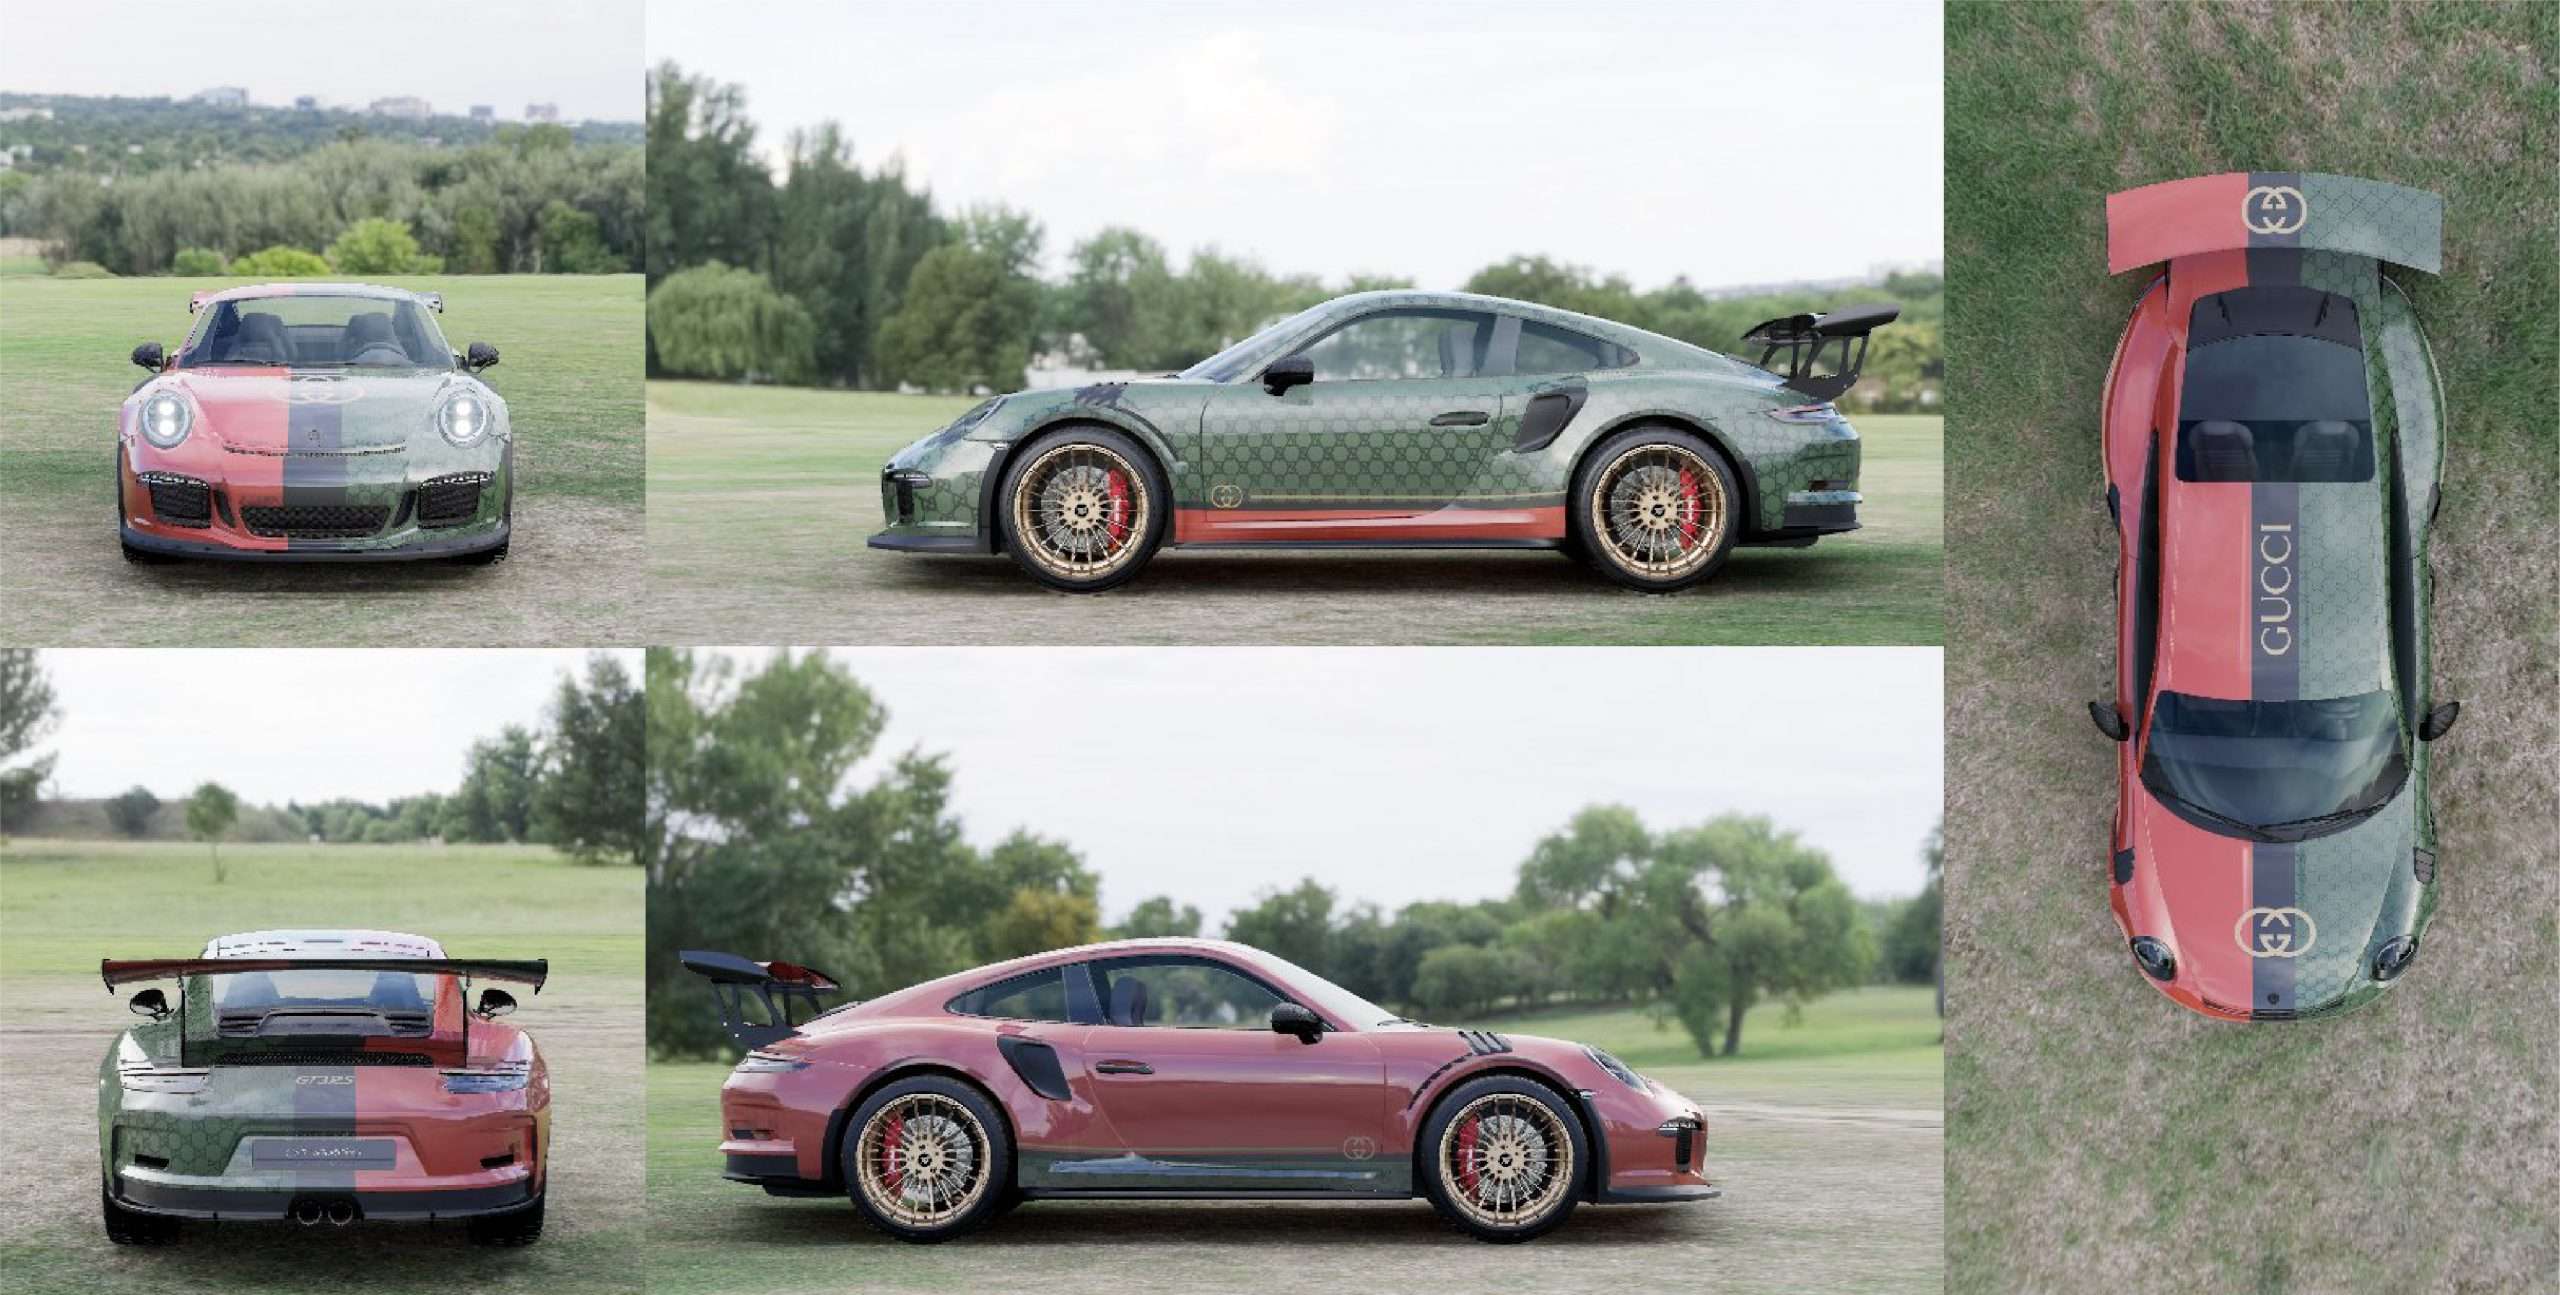 Gucci Wrapped Porsche 911 